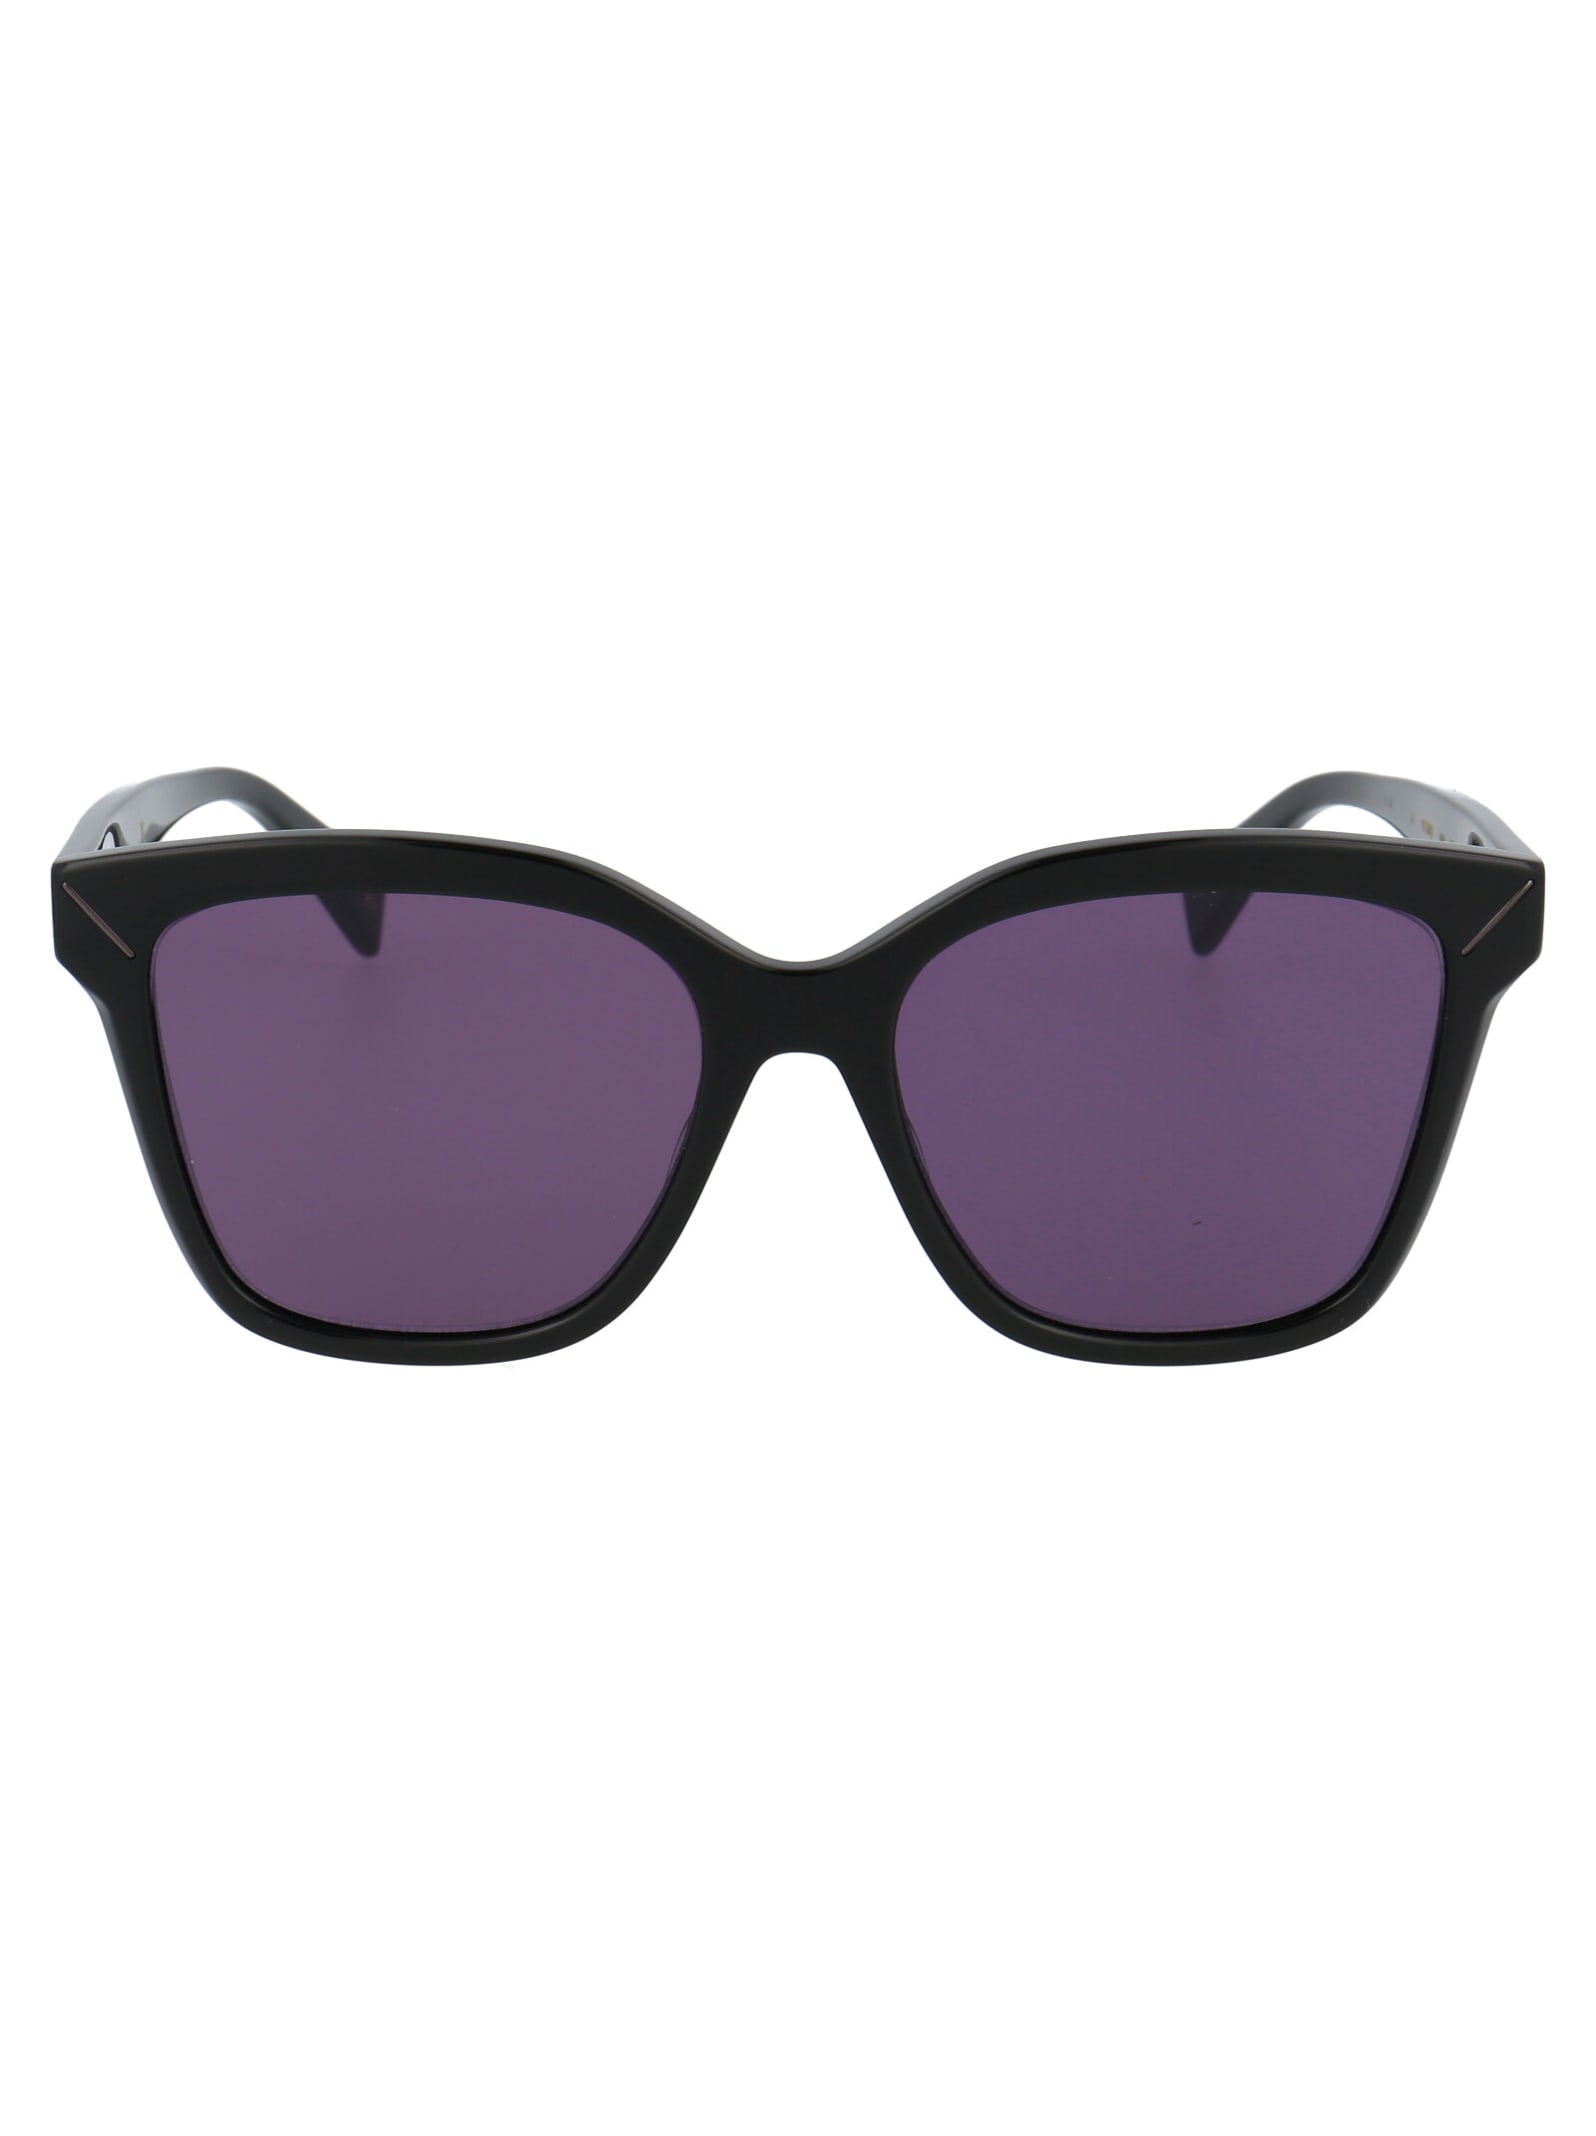 Yohji Yamamoto Ys5002 Sunglasses